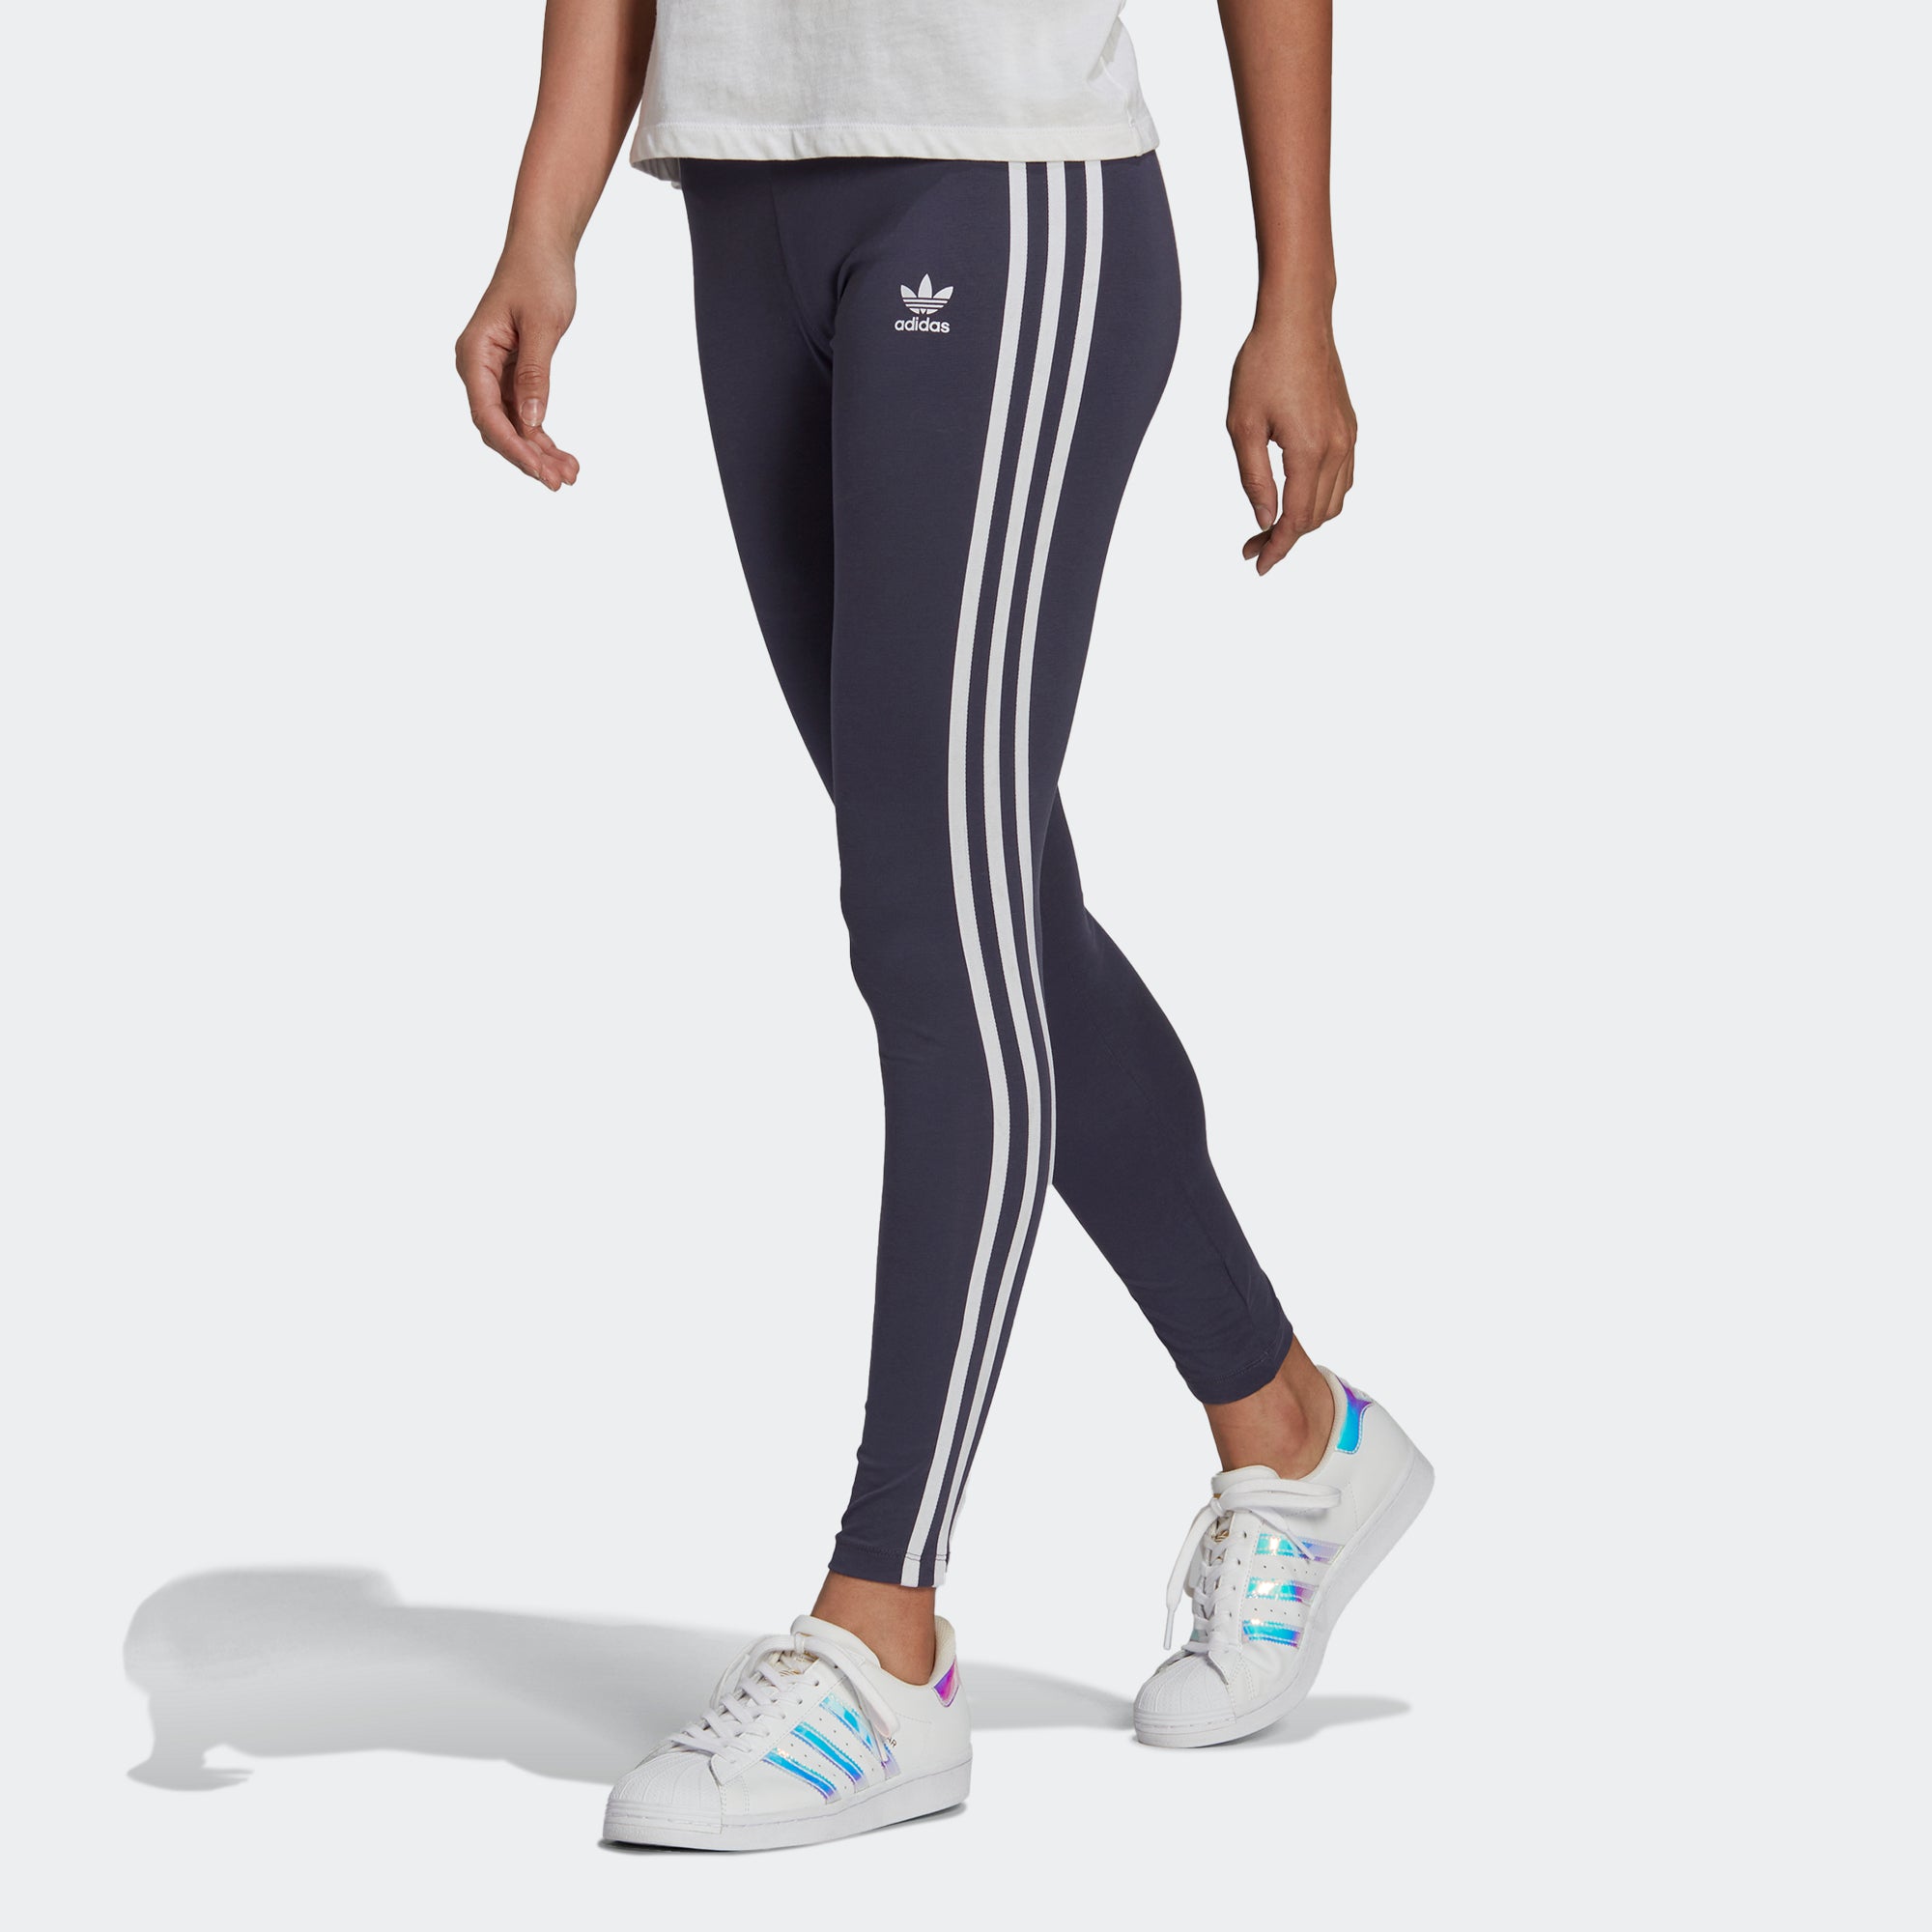 Adidas Originals 3-Stripes Womens Leggings Dark Blue